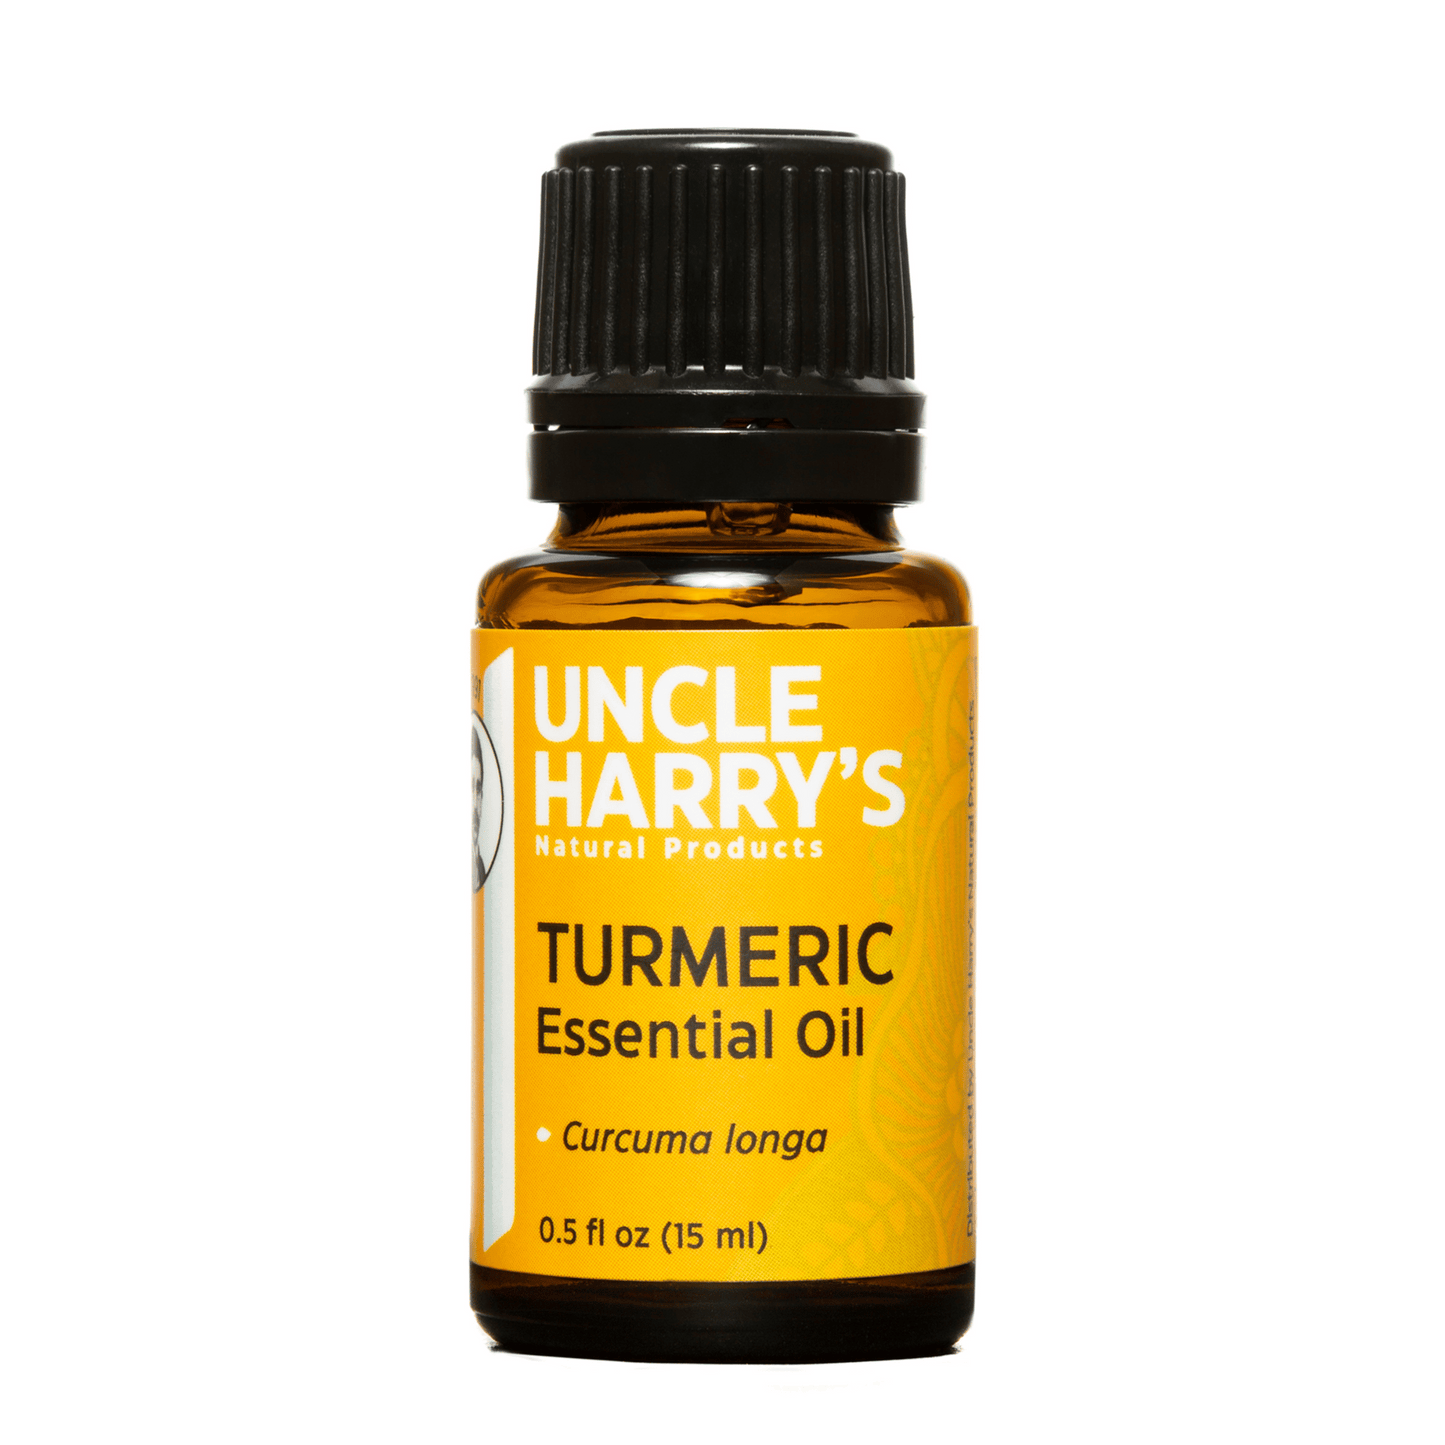 Primary Image of Turmeric Oil